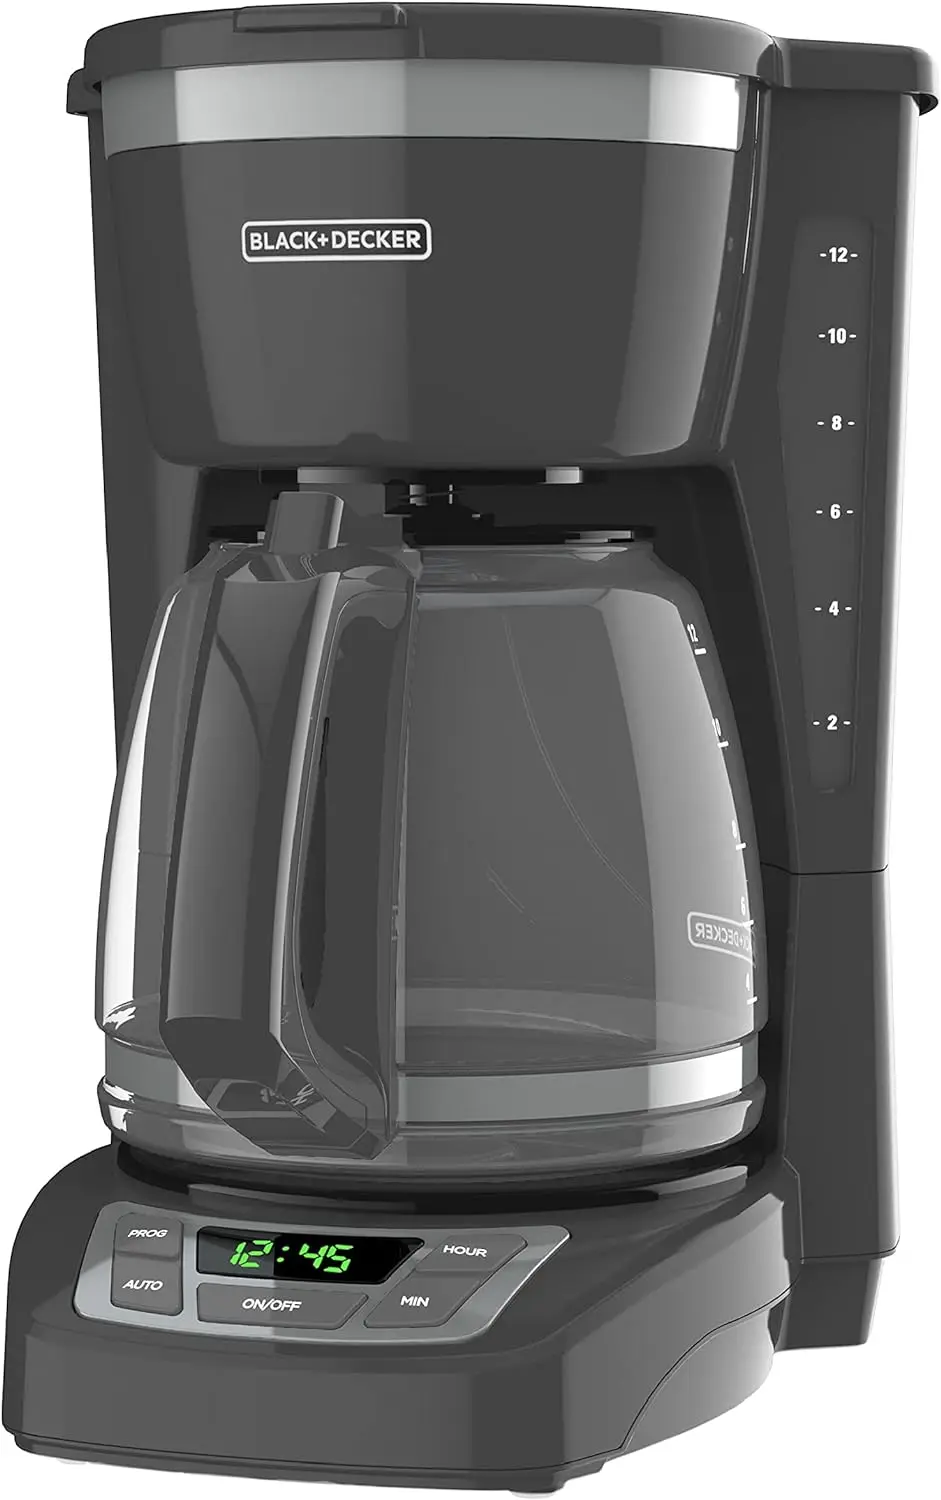 https://ae01.alicdn.com/kf/Sfdd738fed13f42c9a688a800227fdd31k/Black-Decker-CM1160B-12-Cup-Programmable-Coffee-Maker-Black-Stainless-Steel.jpg